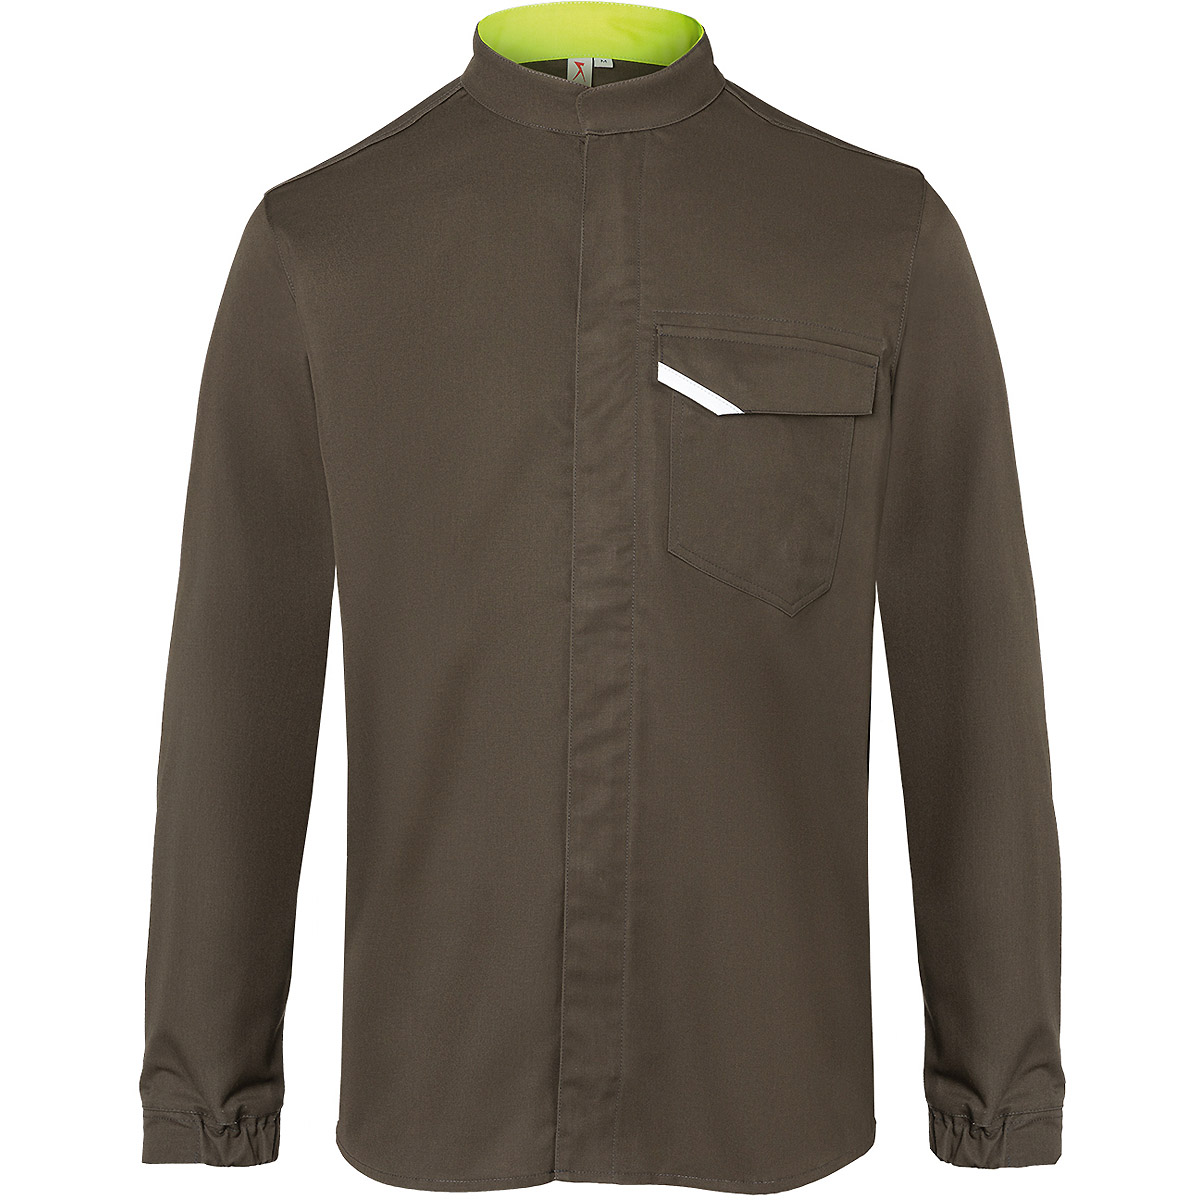 KÜBLER BIOGUARD Hemd PSA 3 | T-Shirts | Pullover & Shirts | Arbeitskleidung  | Arbeitsschutz | tuulzone